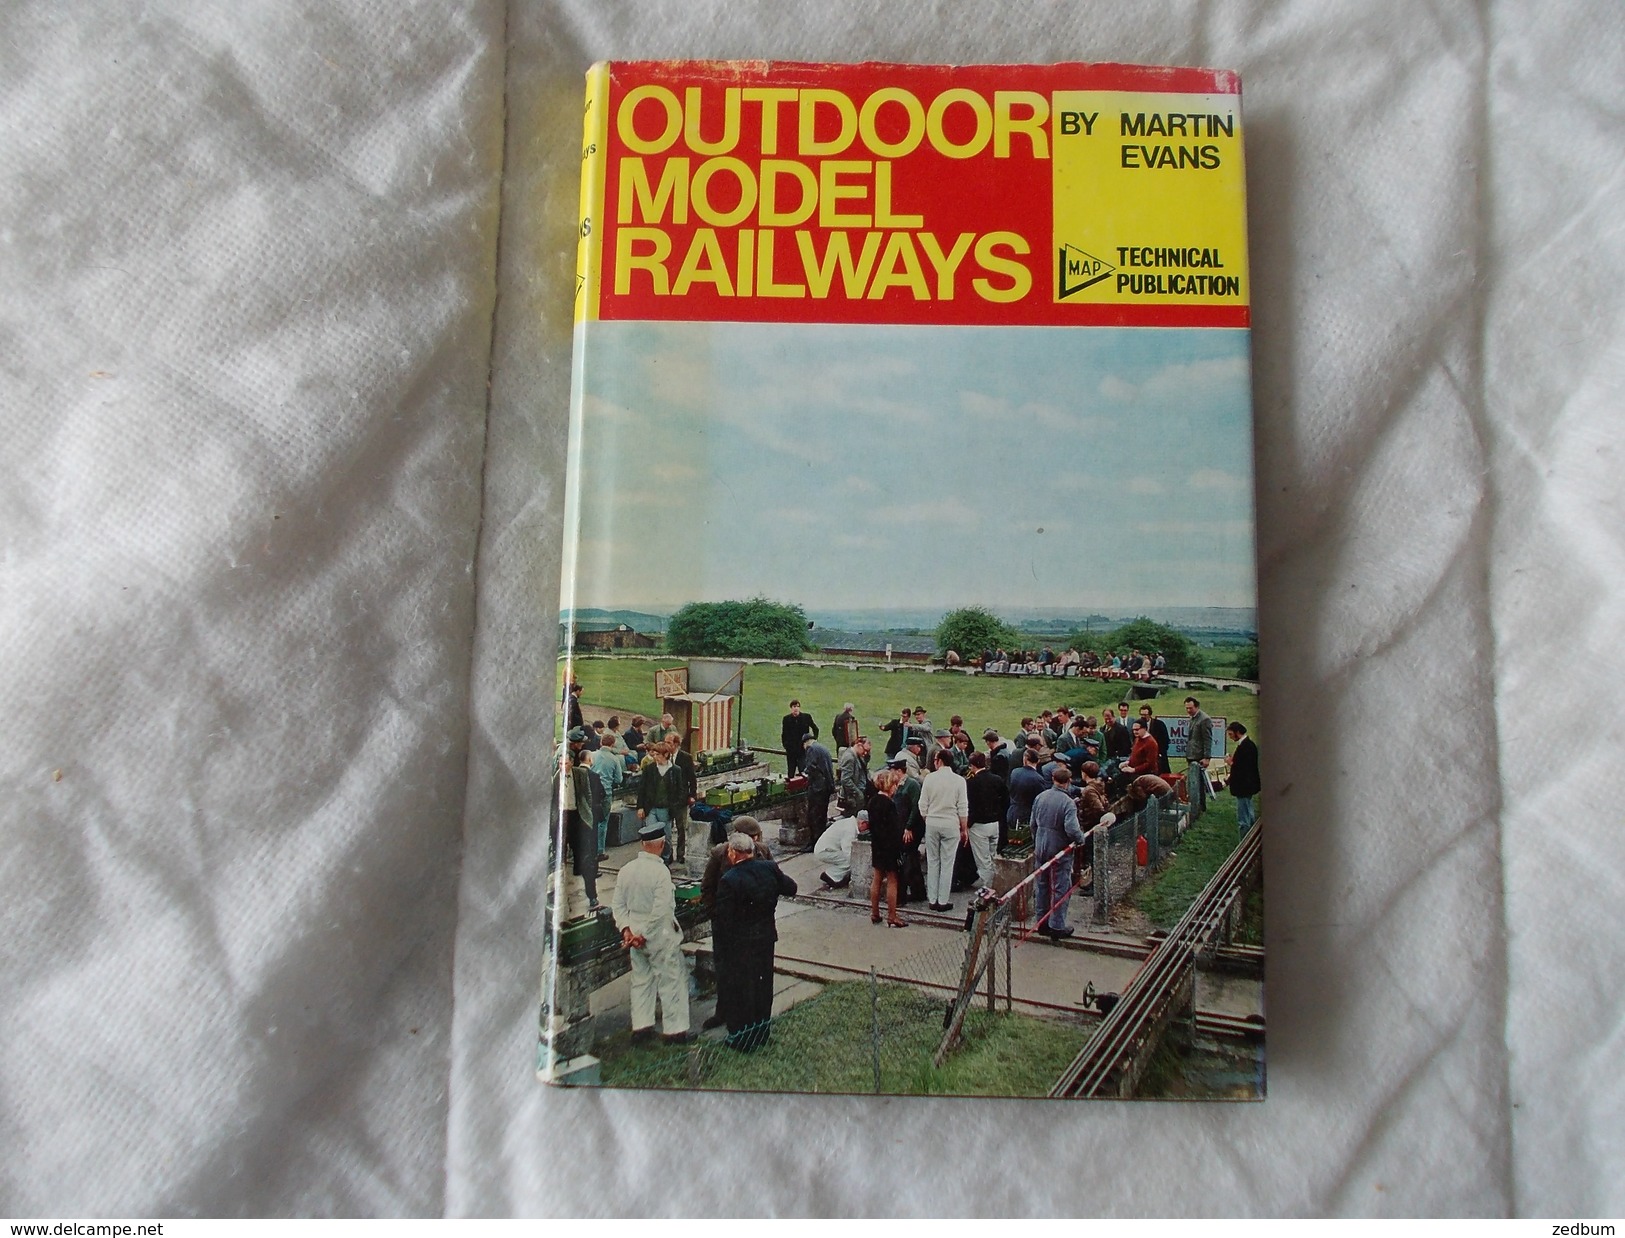 Outdoor Model Railways By Martin Evans - Livres Sur Les Collections